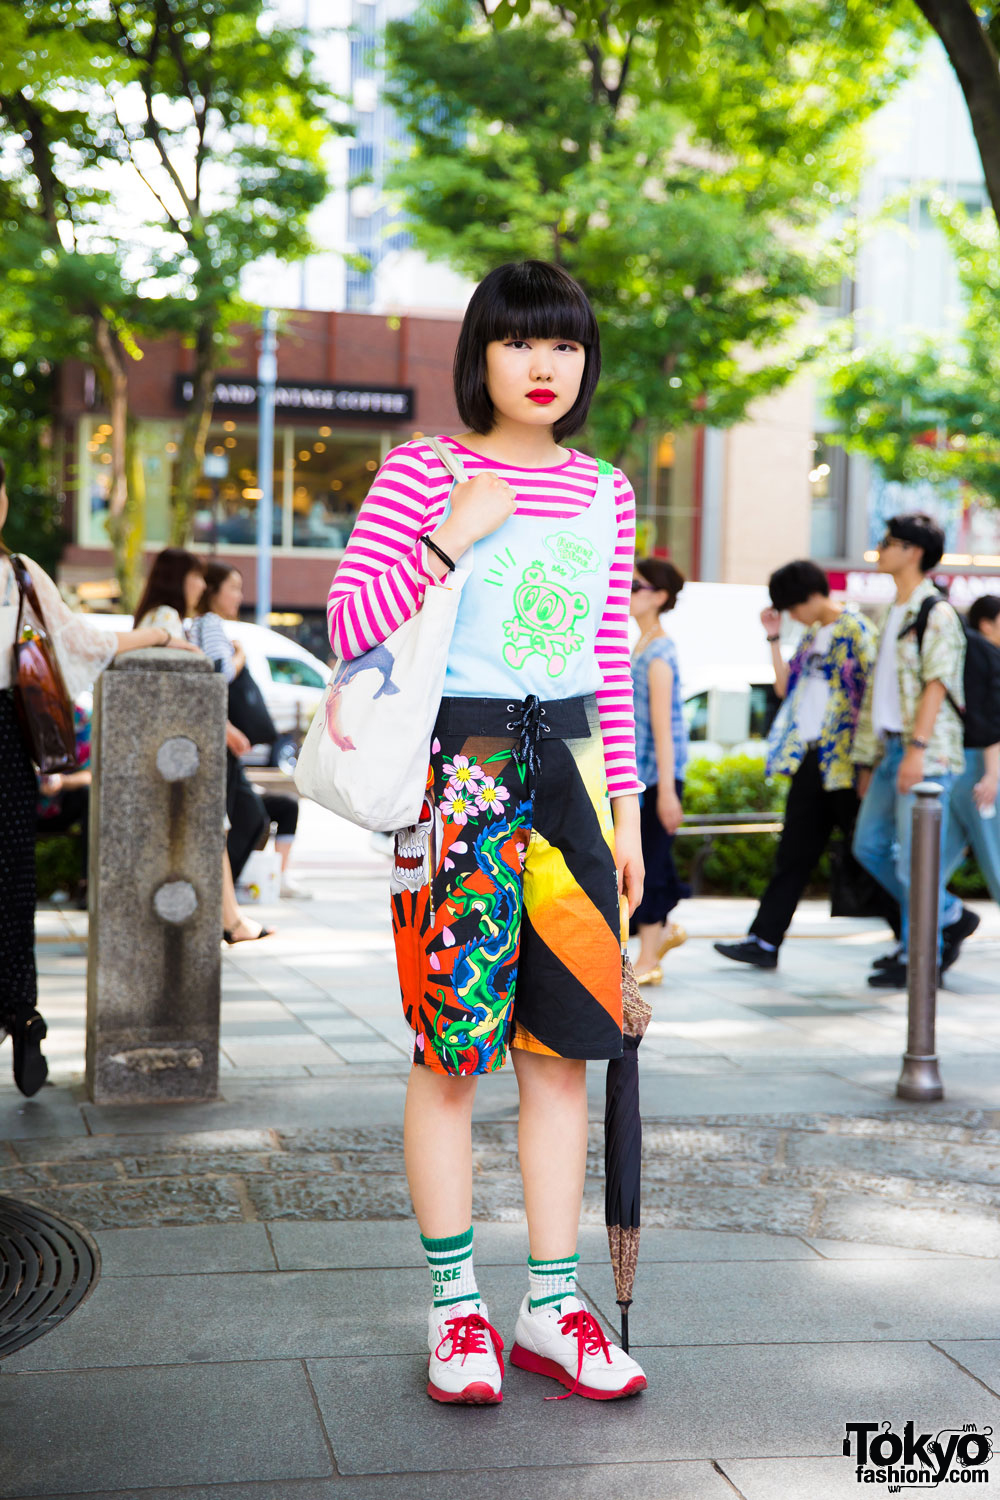 Harajuku Girl in Colorful Eclectic Fashion w/ Dog Harajuku, Pinnap & Village Vanguard